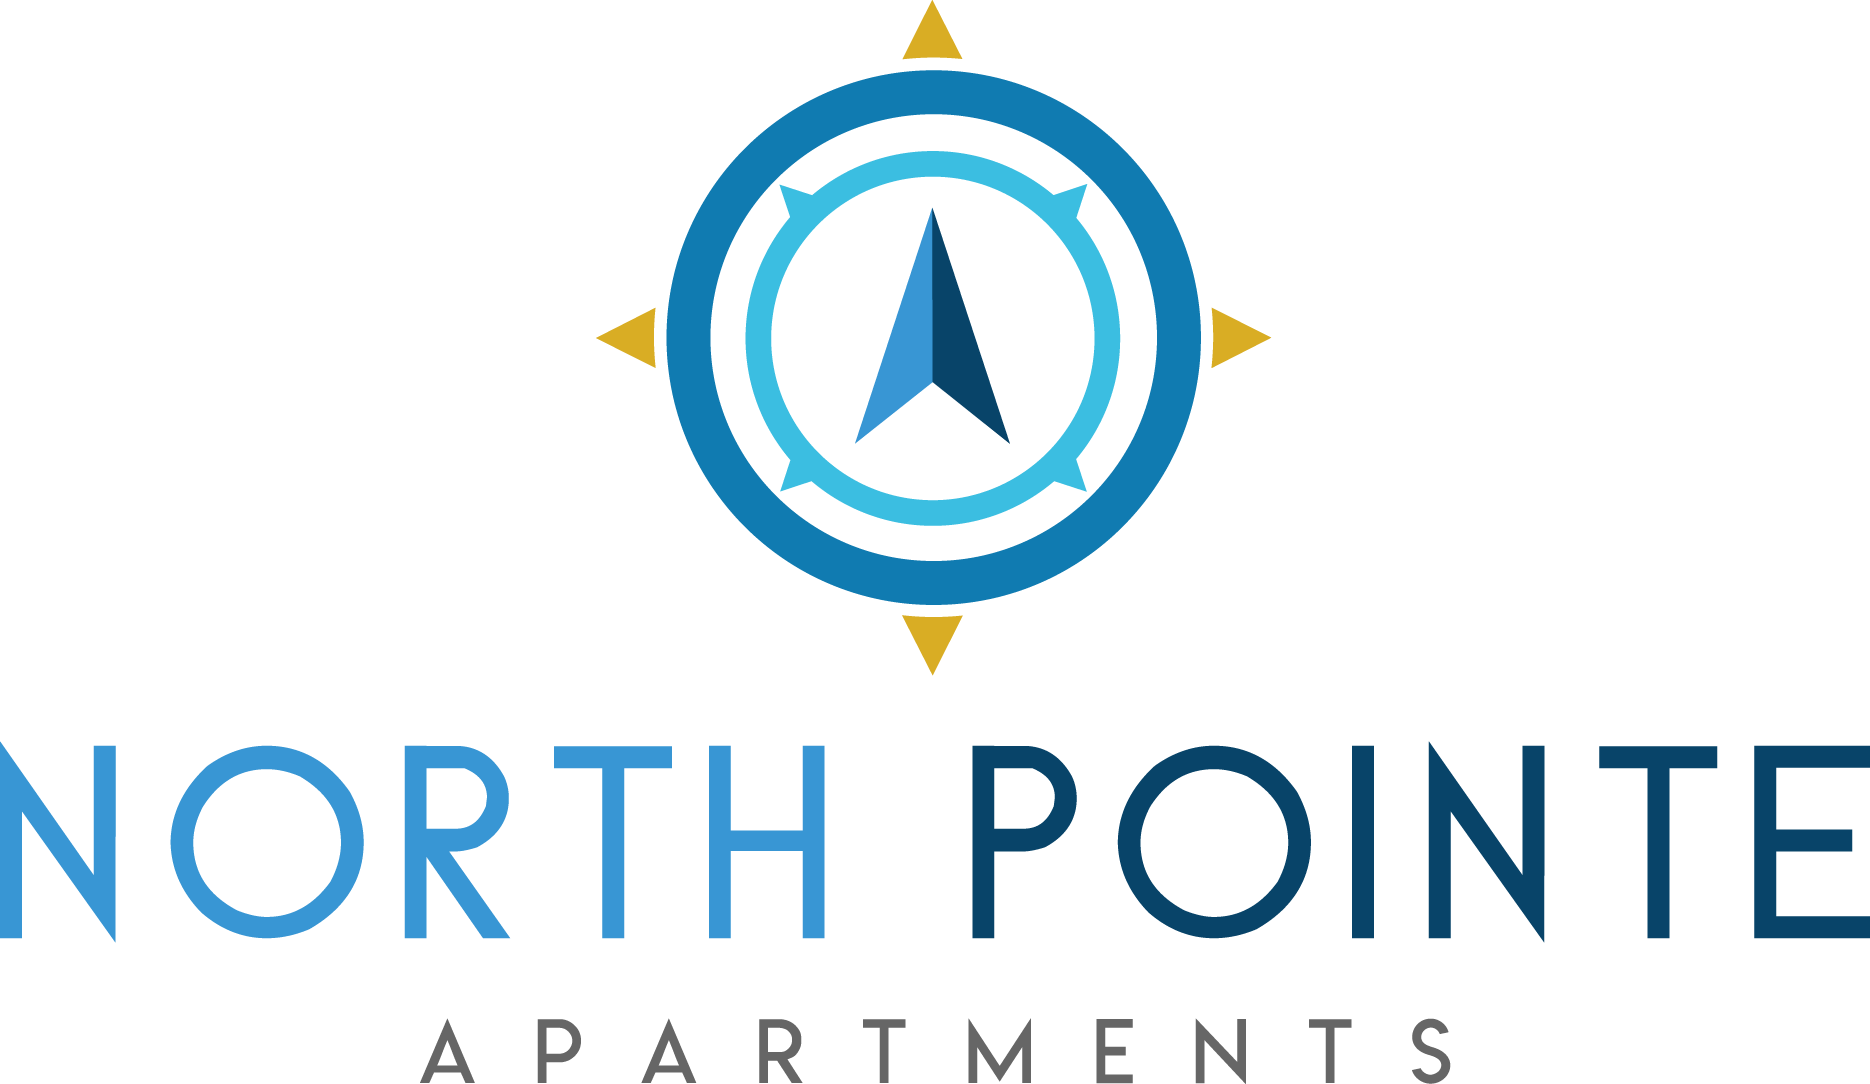 North Pointe Apartments Logo